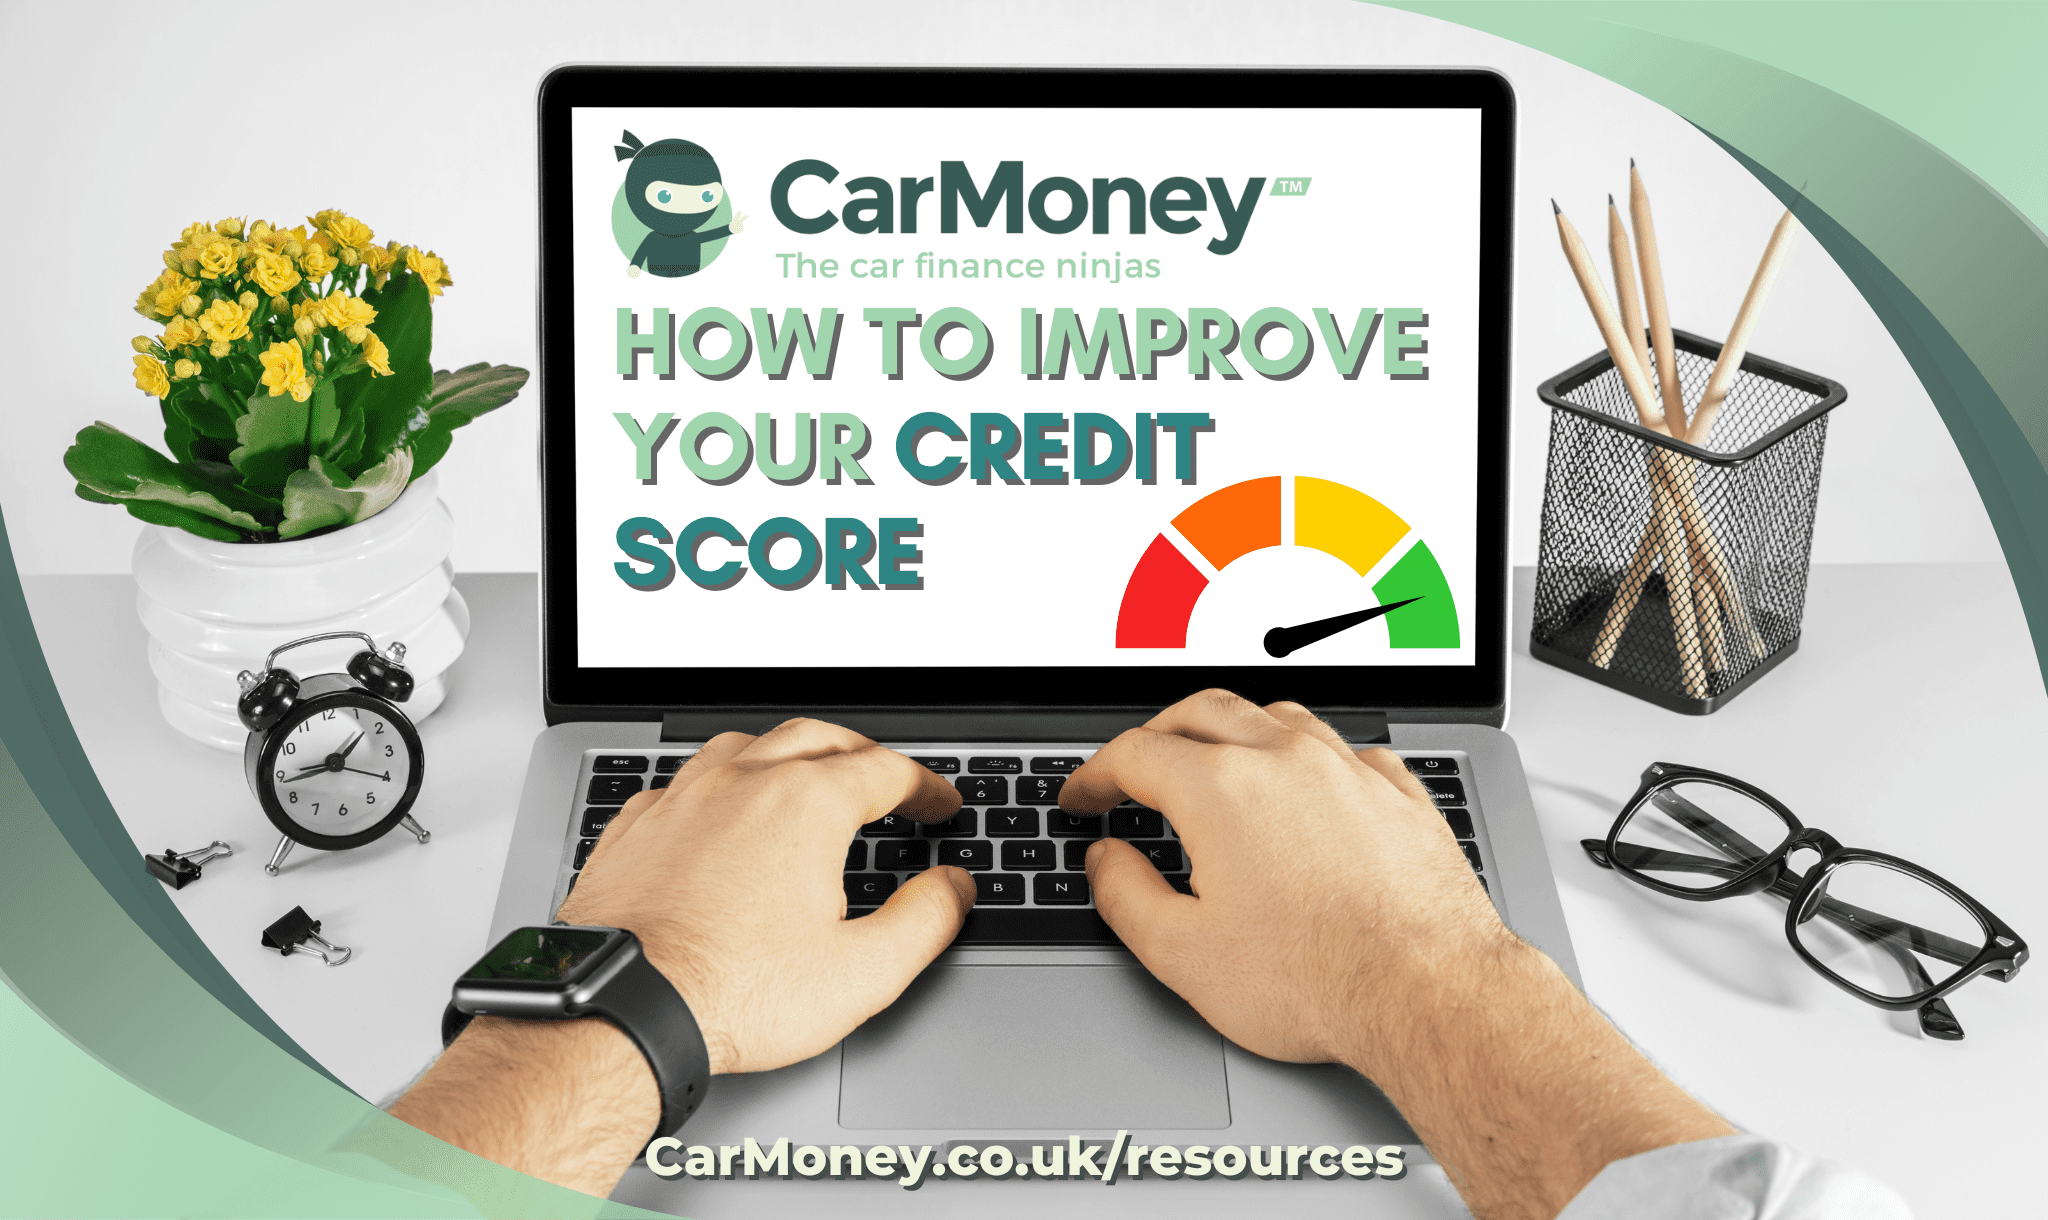 How to Improve Credit Score | CarMoney.co.uk